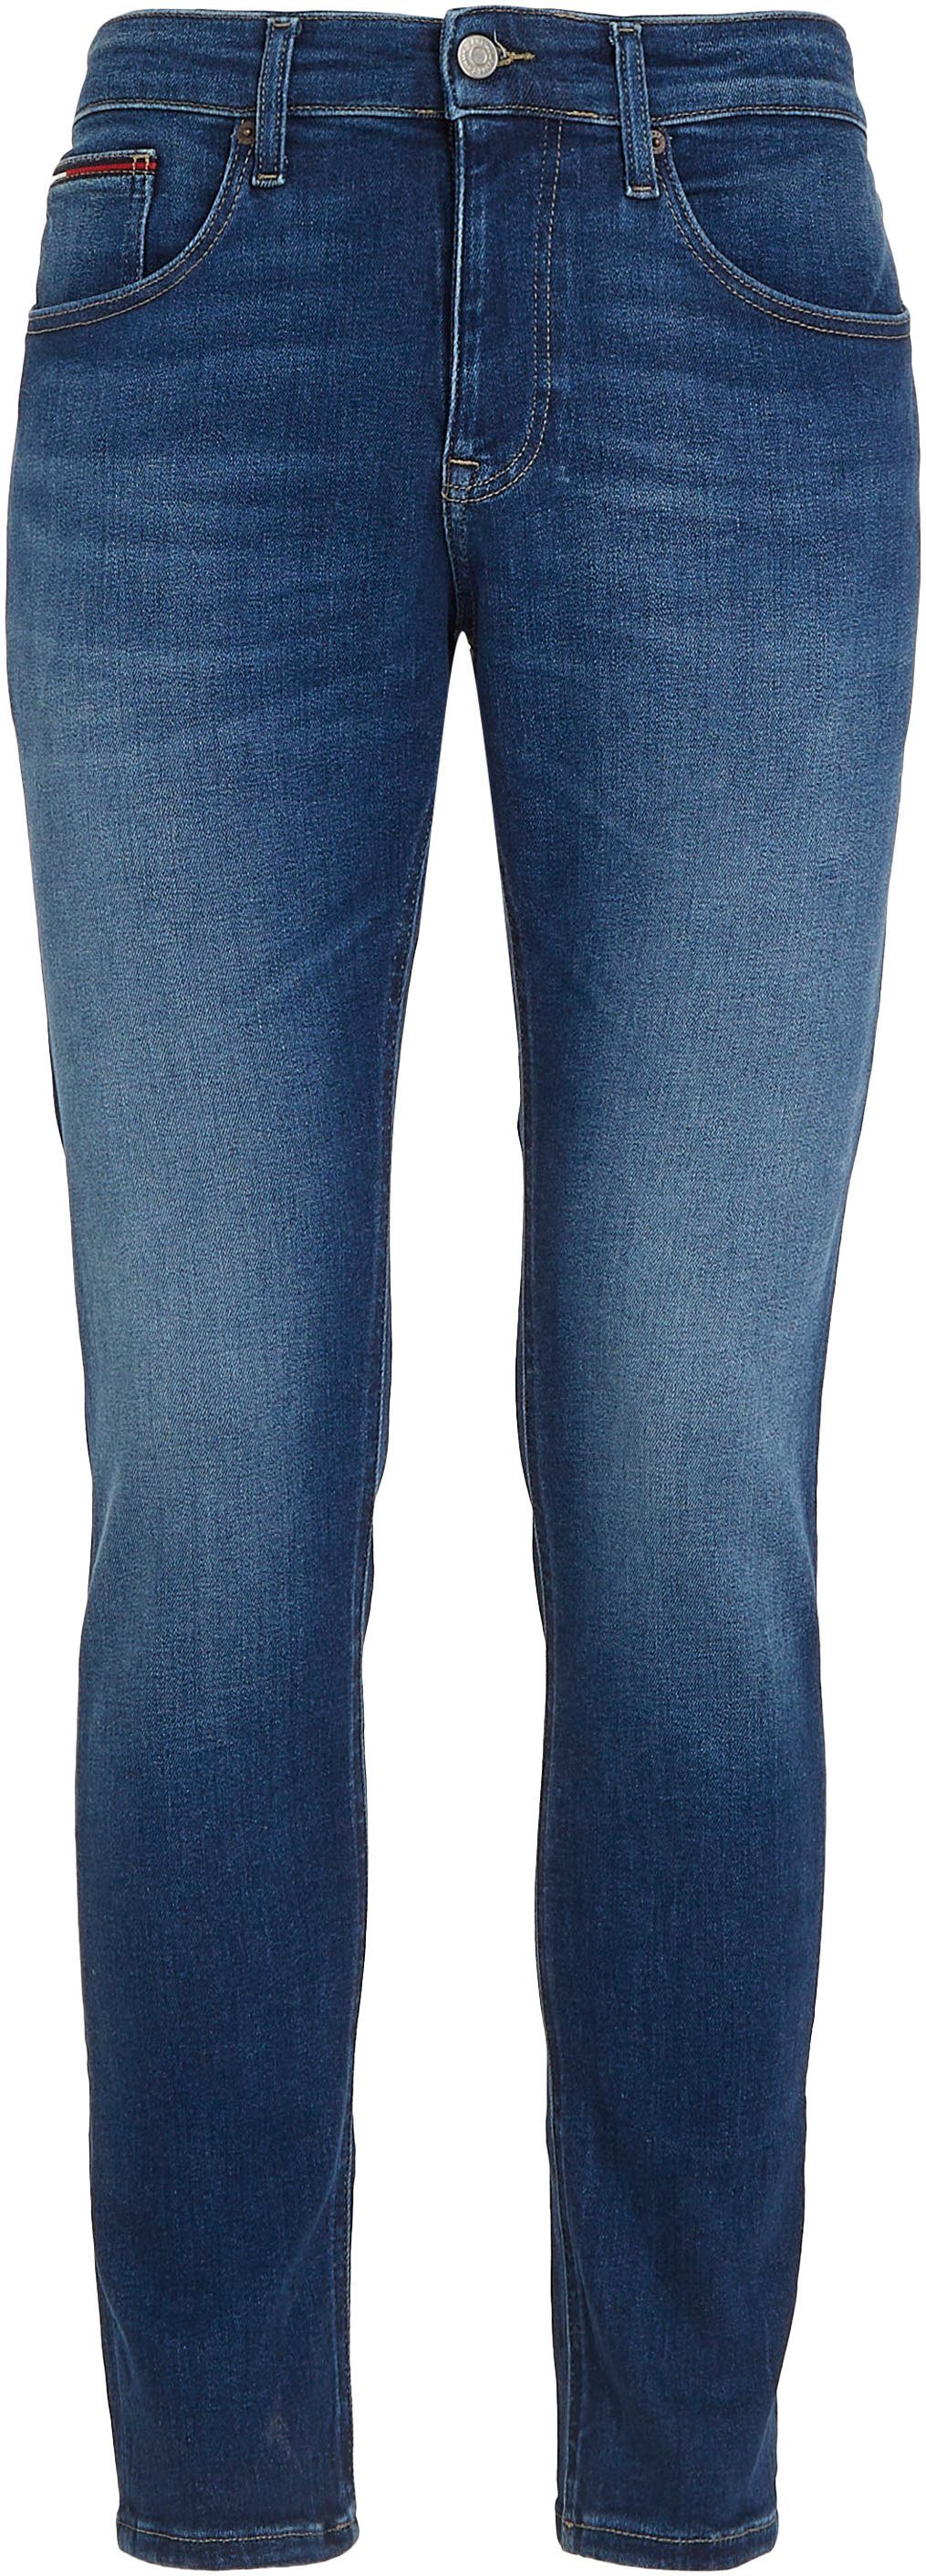 Lederbadge mit SLIM AUSTIN Slim-fit-Jeans denim Tommy Jeans medium TPRD